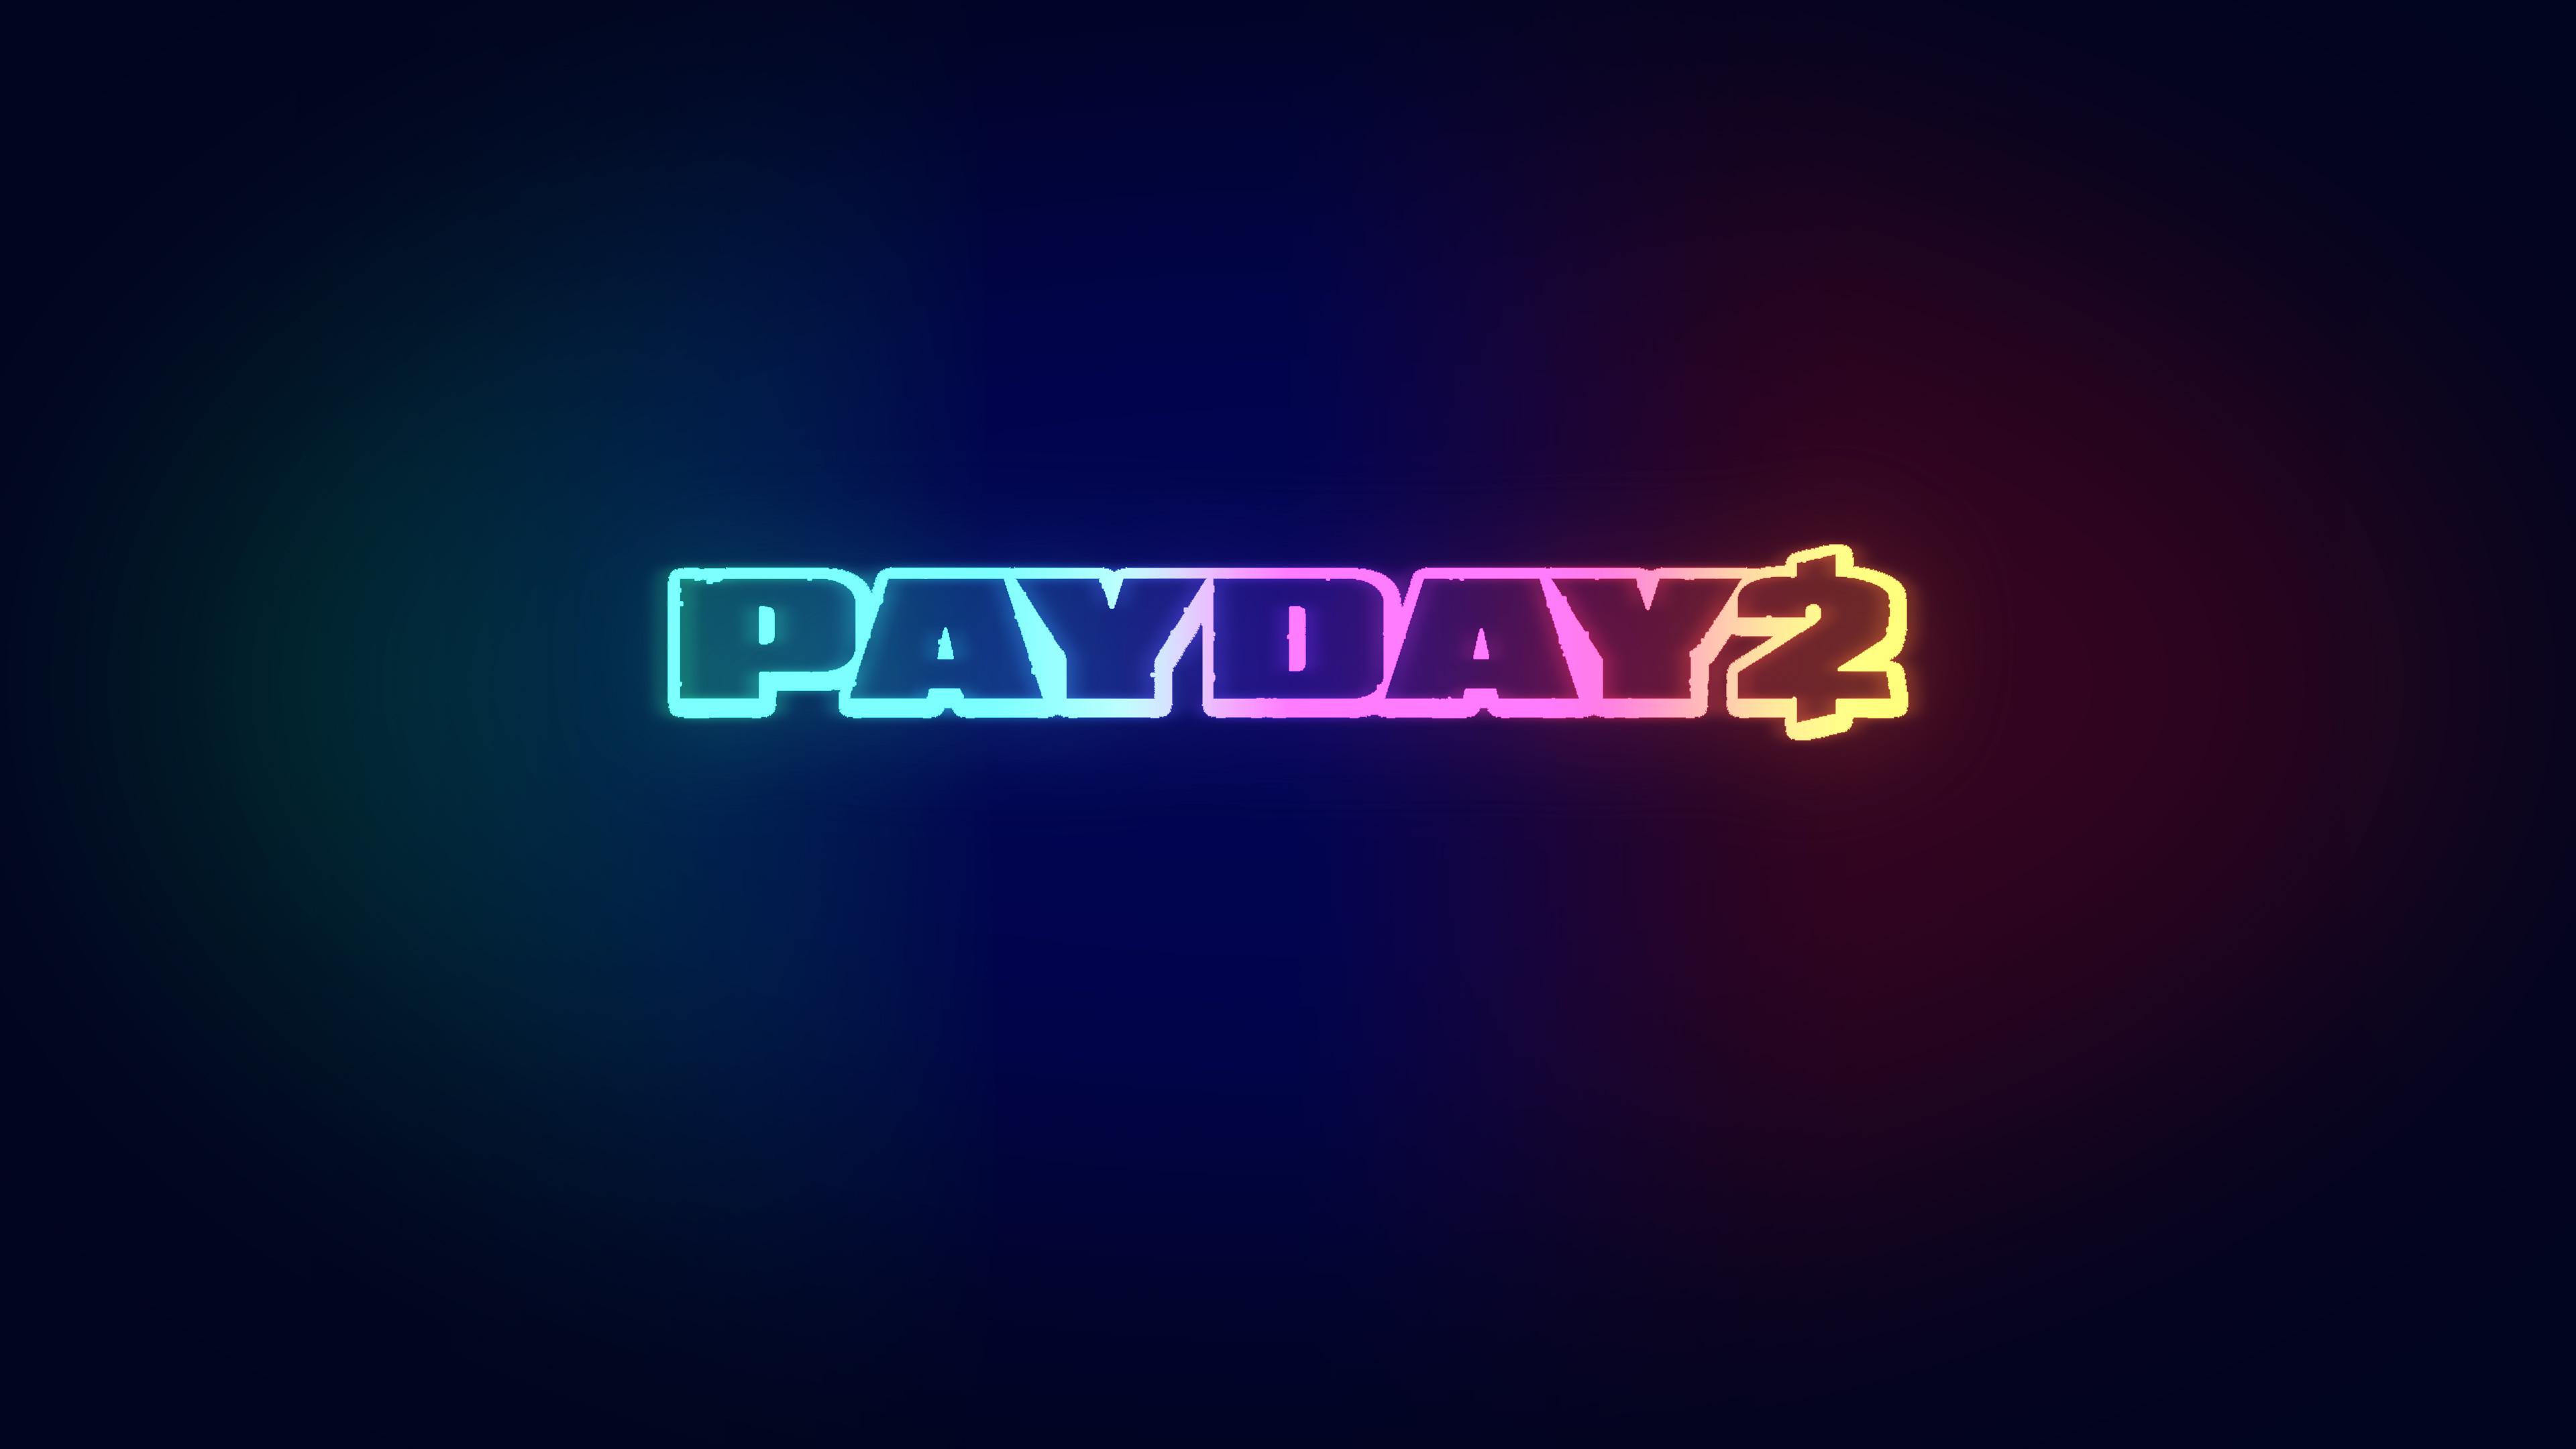 Neon payday 2 wallpaper [3240 x 2160]